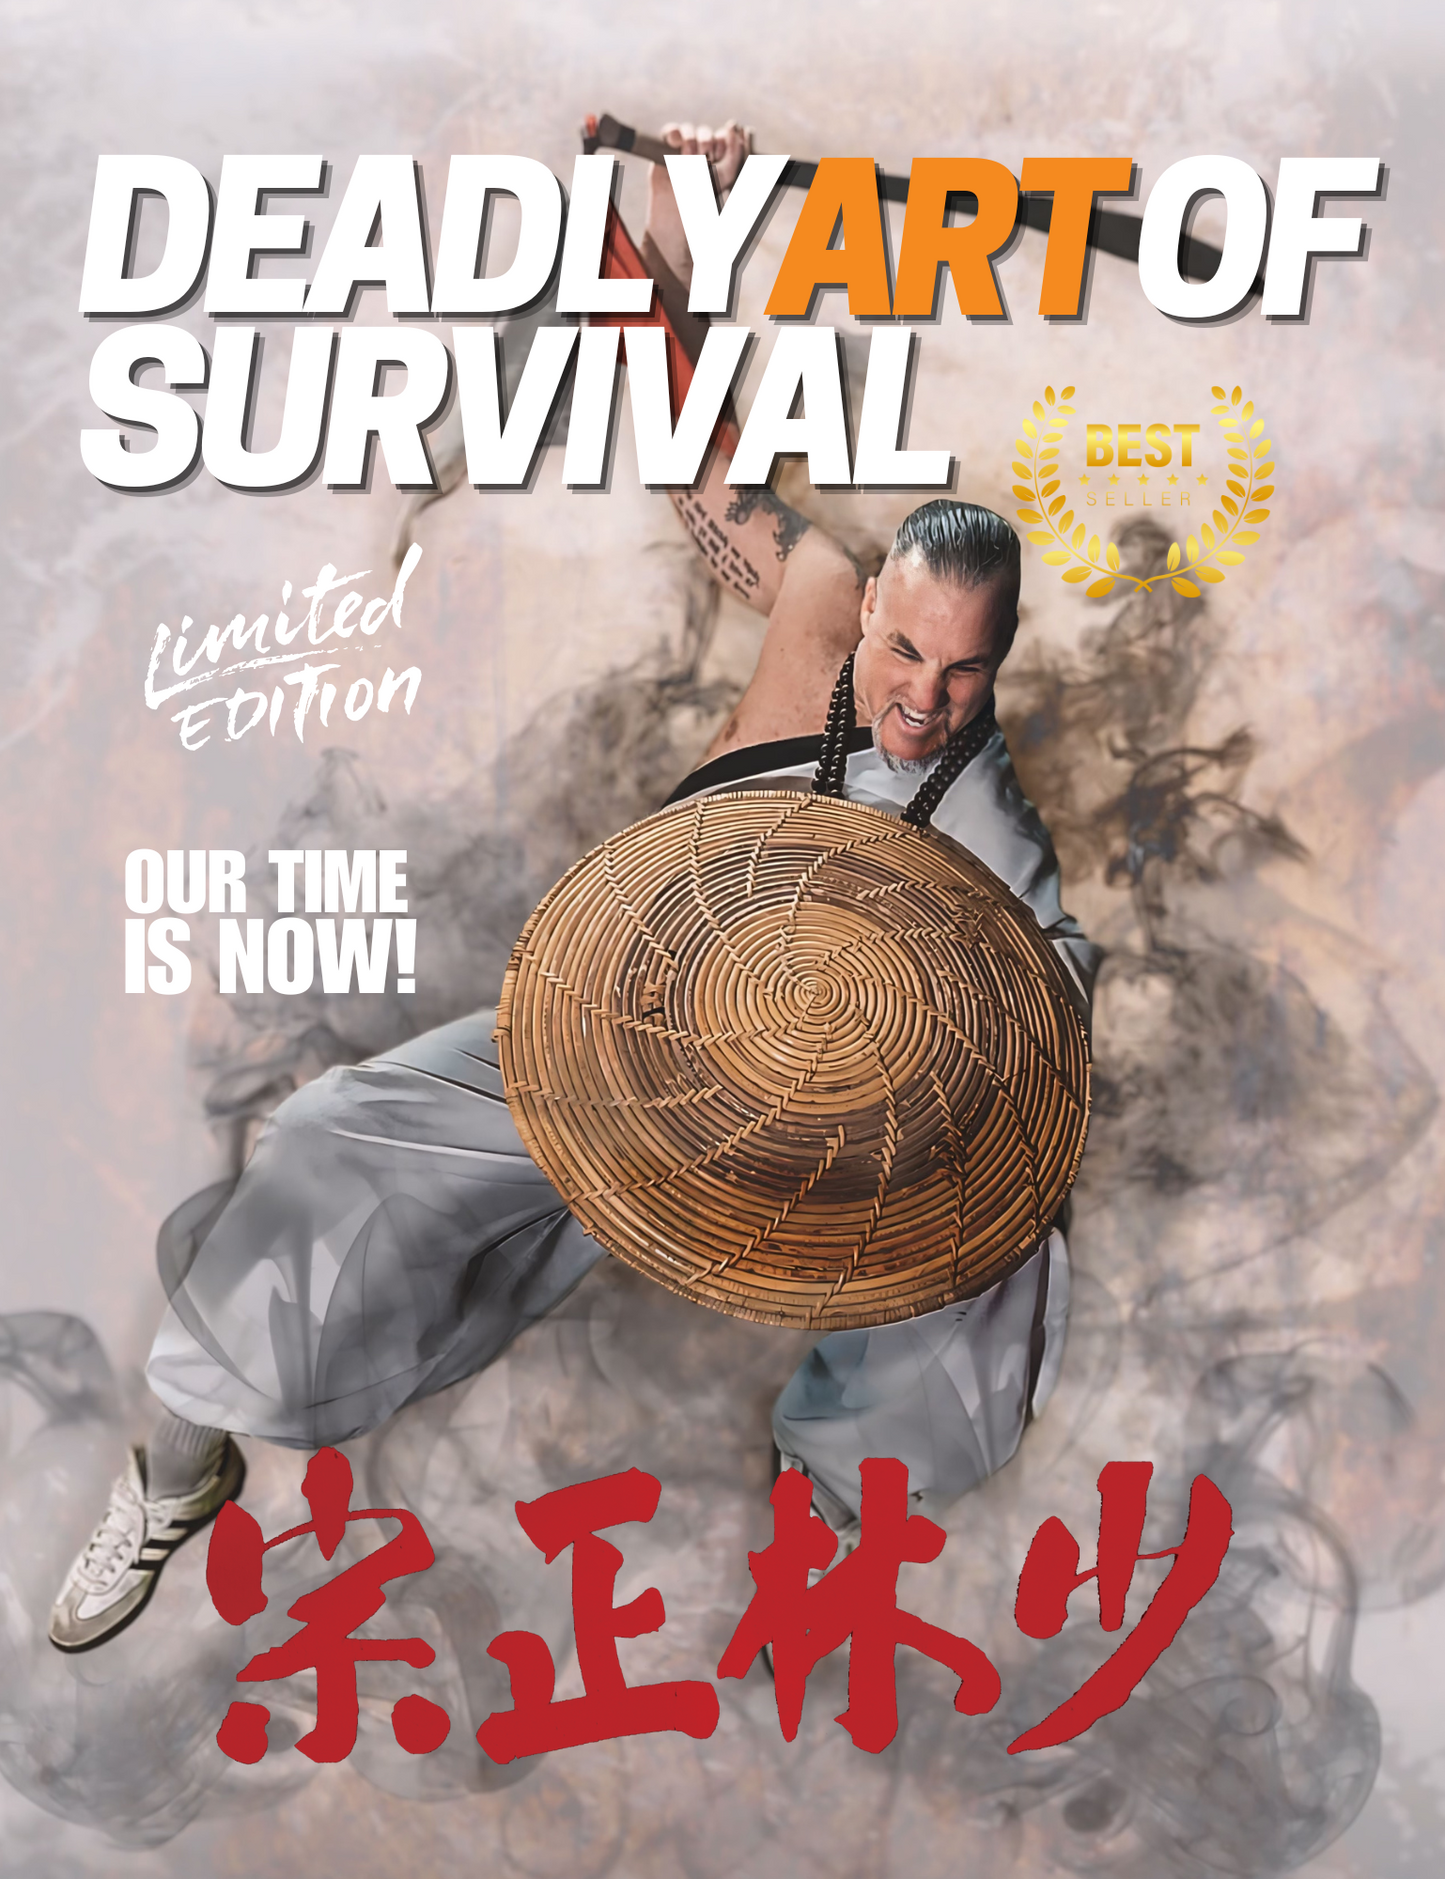 Deadly Art of Survival Magazine 17th Edition: Featuring Jadi Tention - Shi Fu Gregg Zilb - Carl Scott The #1 Martial Arts Magazine Worldwide deadlyartofsurvival.com